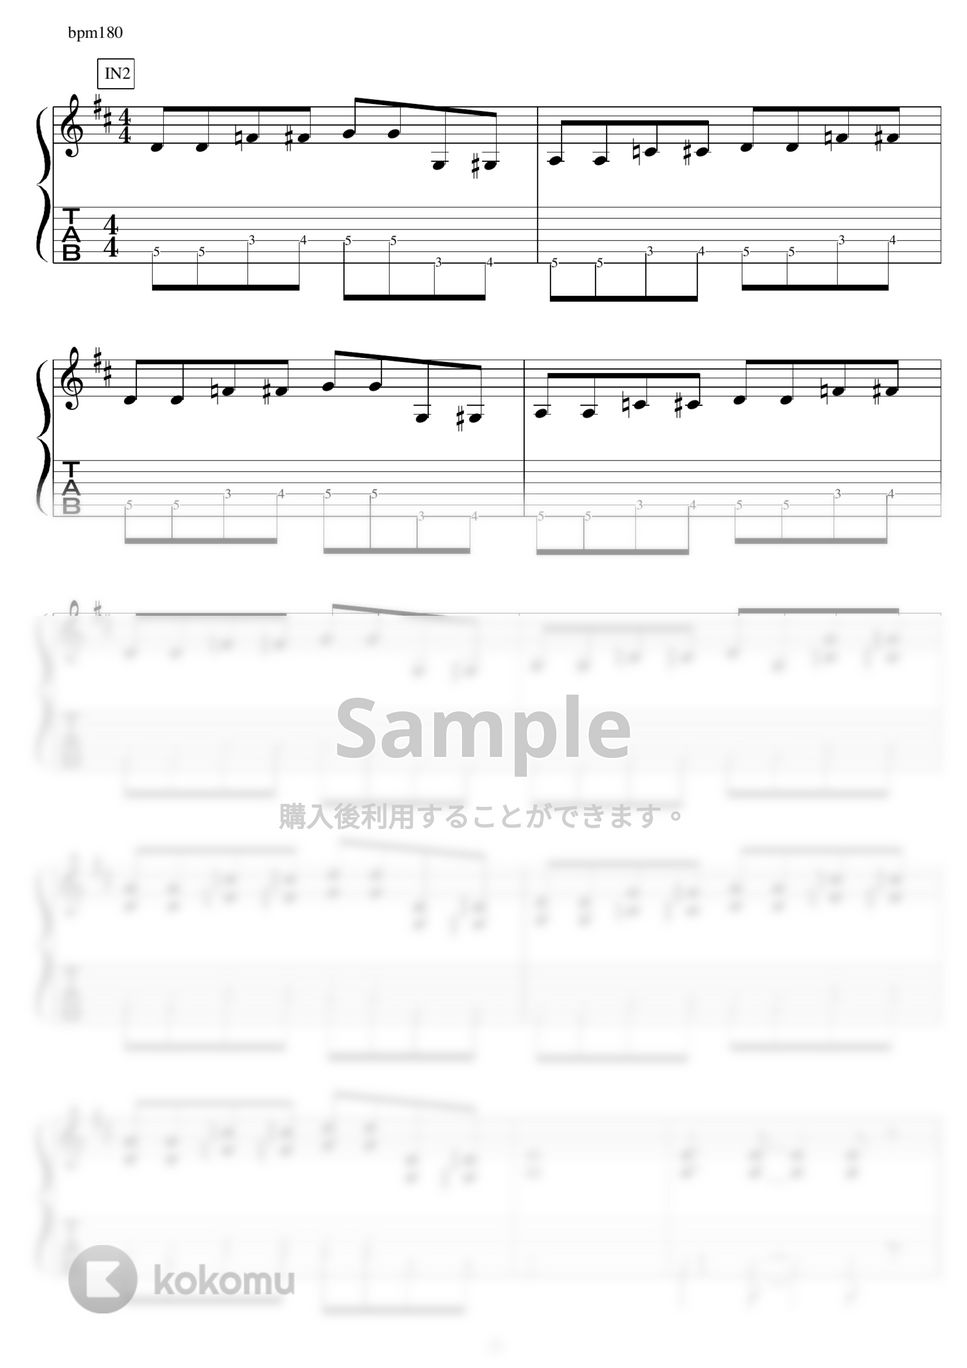 Hi-STANDARD - ハイスタ GROWING UP 人気曲3セット ギター演奏動画あり by バイトーン音楽教室